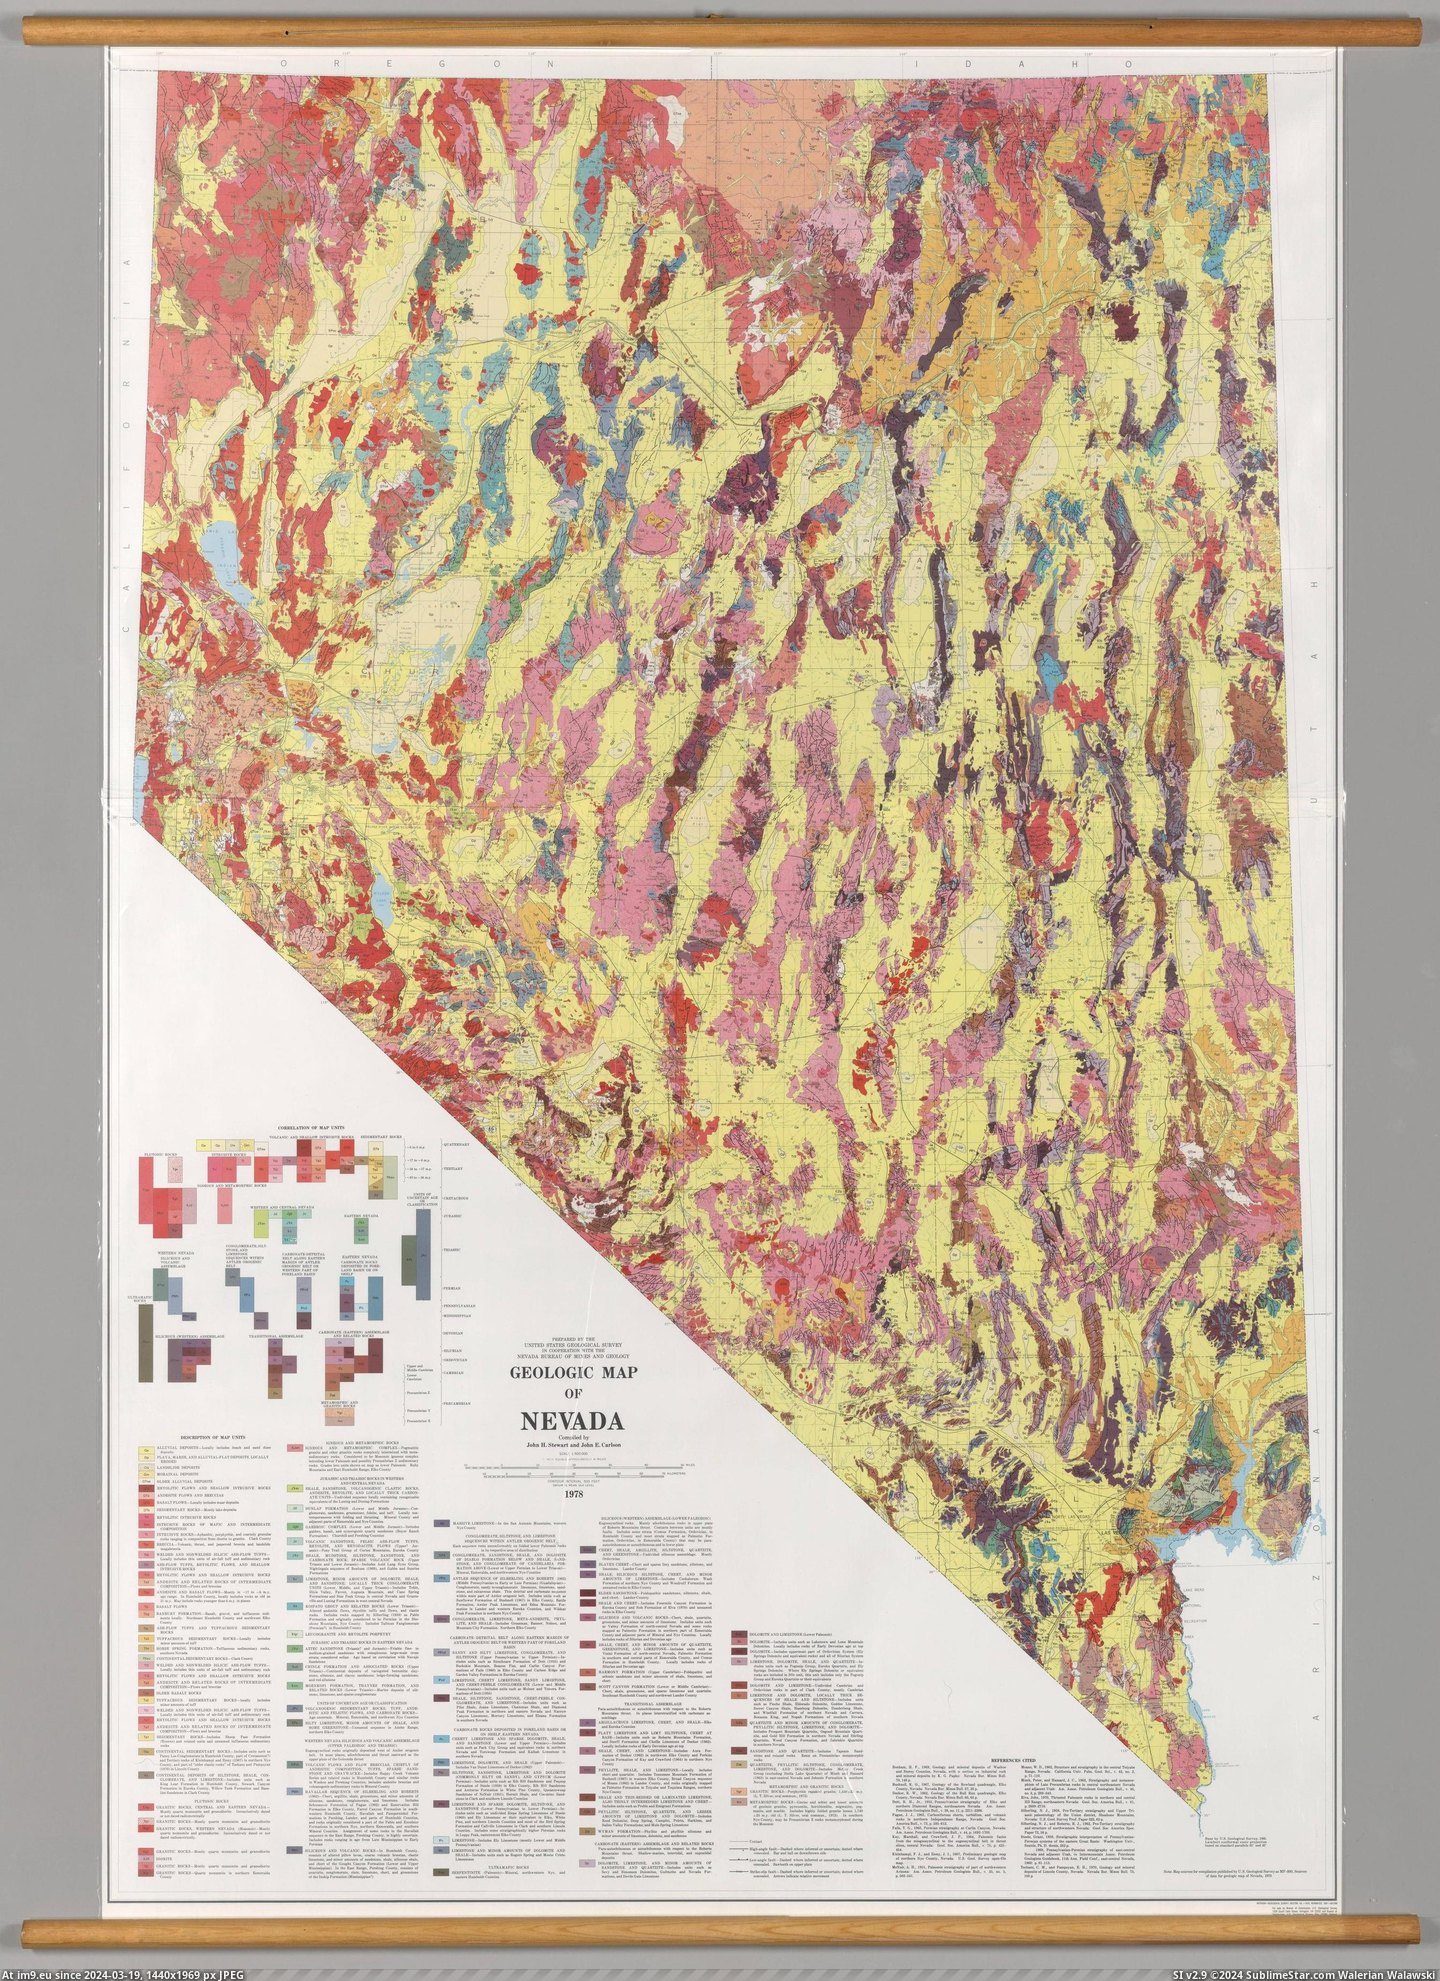 #Map #Nevada #Carlson #Stewart #Geologic [Mapporn] Geologic Map of Nevada, made in 1978 by J. Stewart and J. Carlson [2687x3686] Pic. (Image of album My r/MAPS favs))